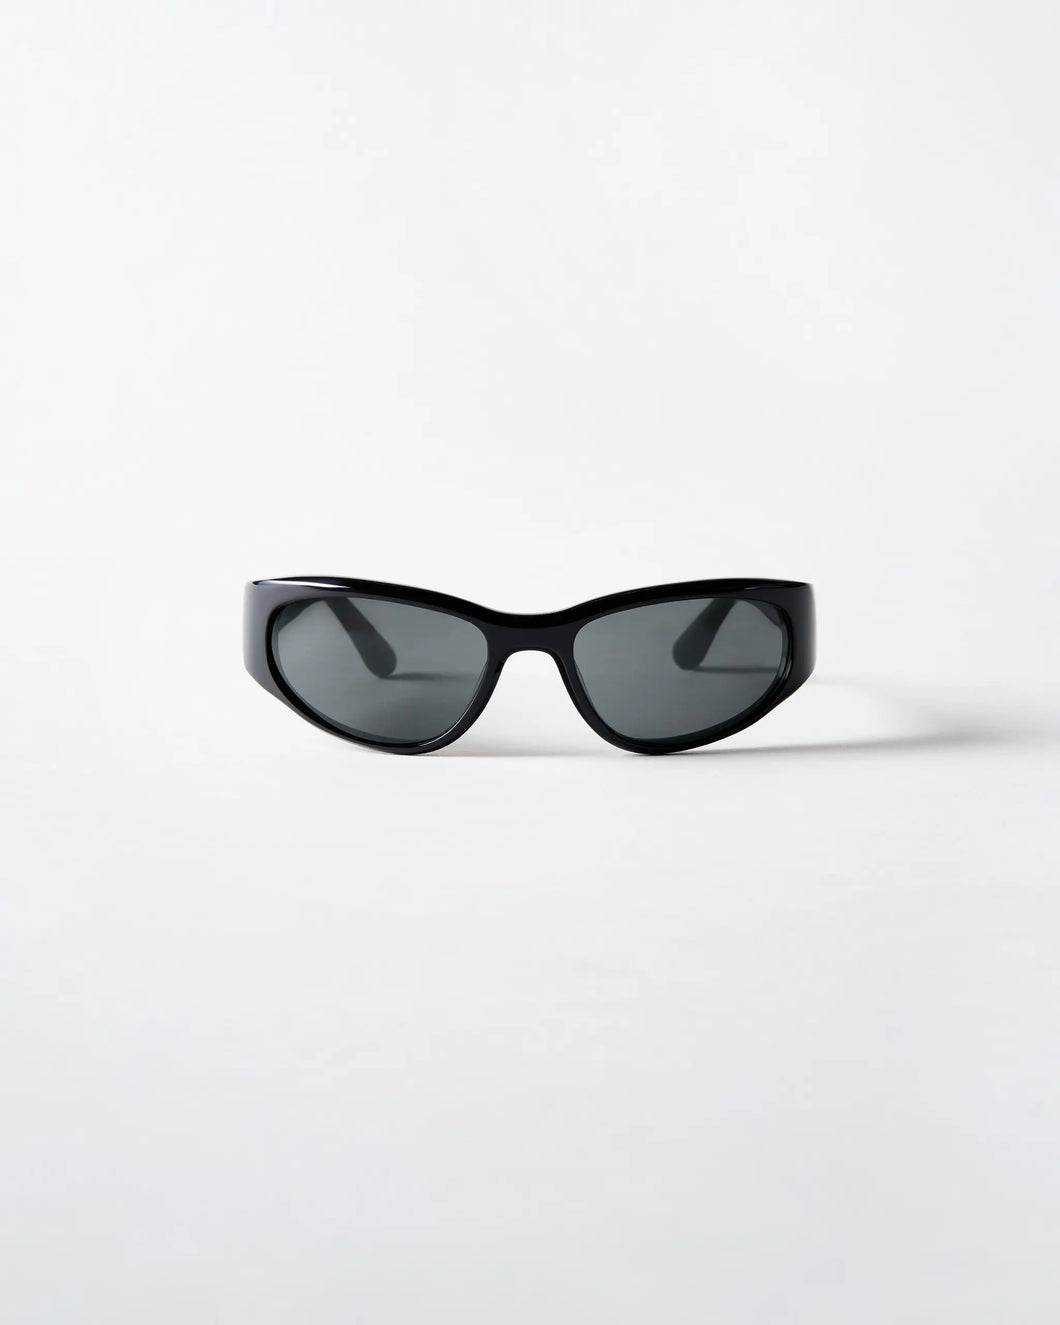 Eve Shadow Sunglasses